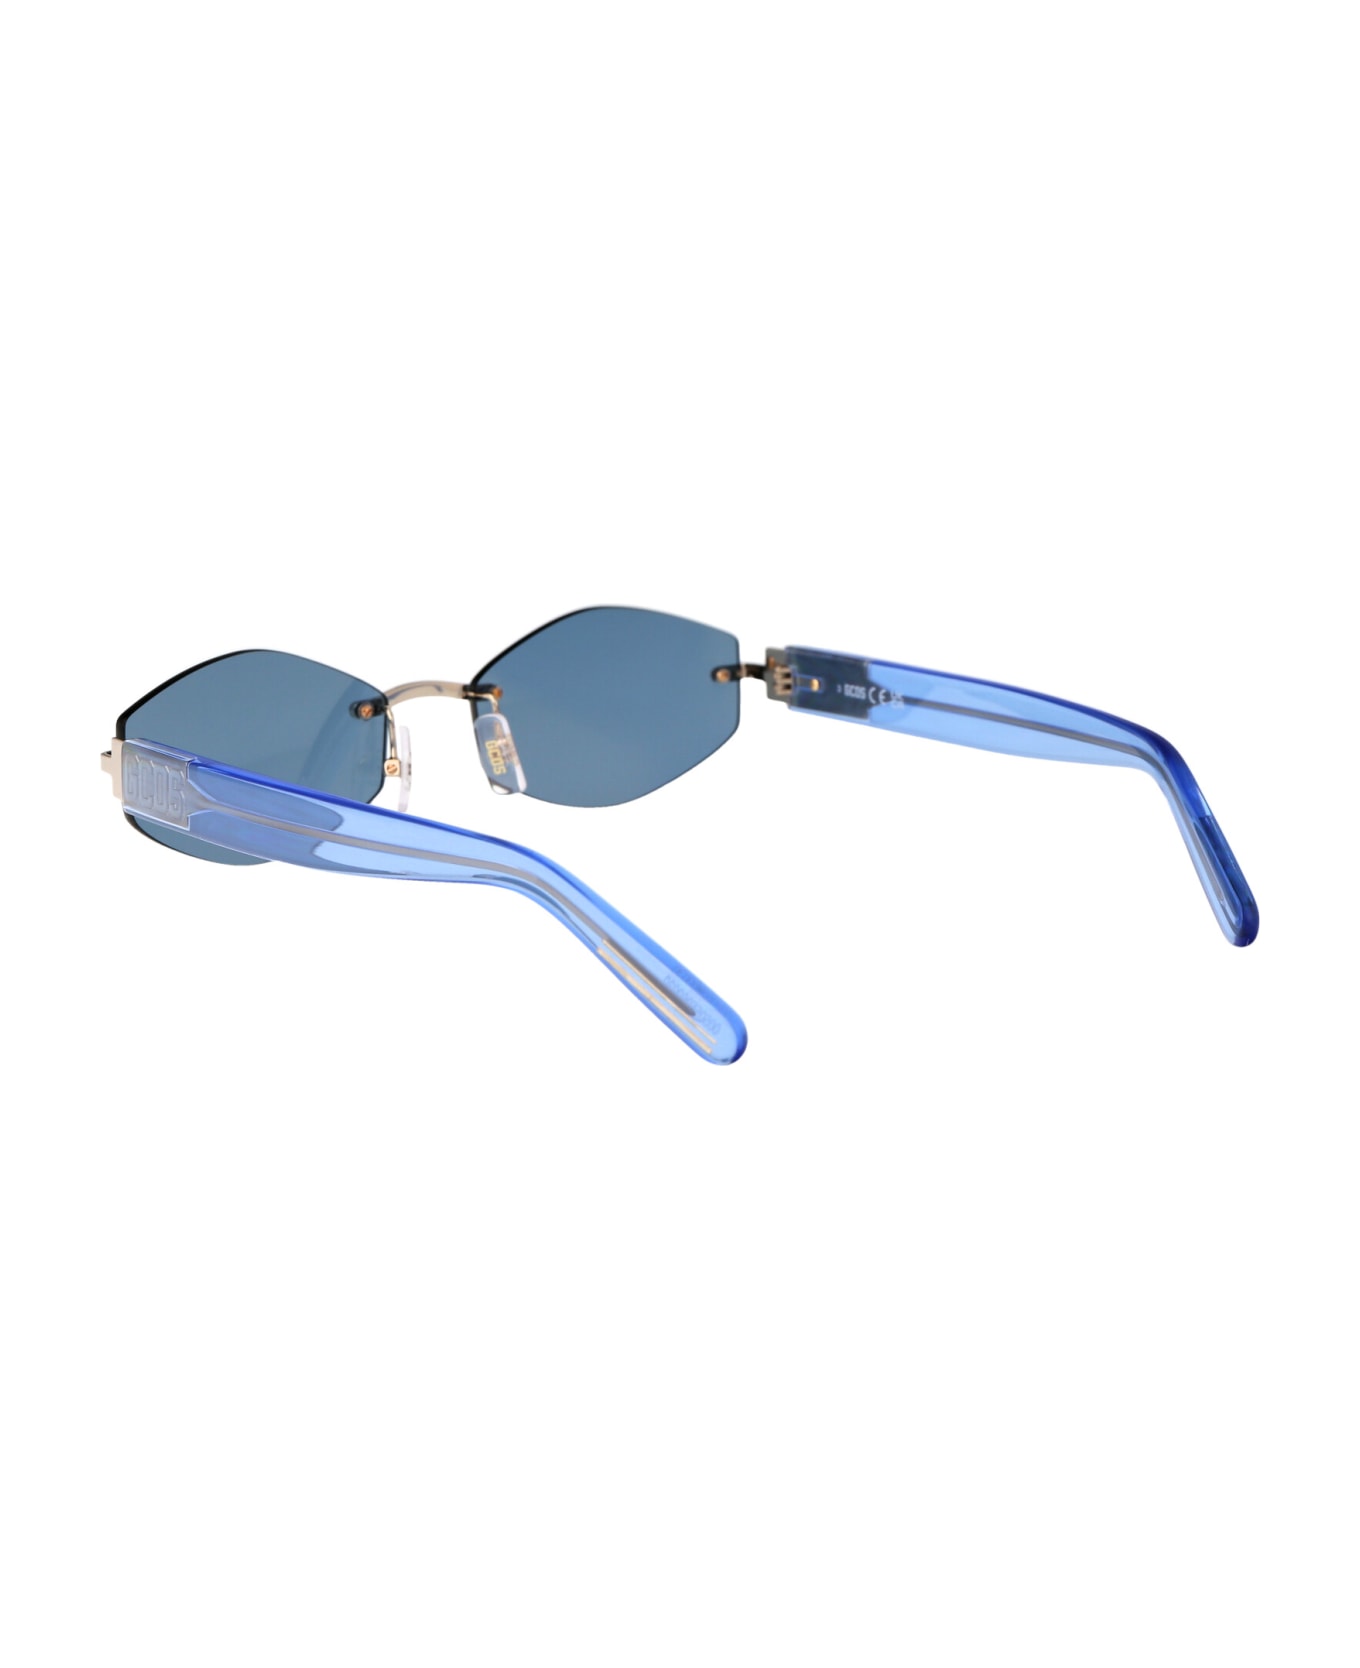 GCDS Gd0040 Sunglasses - 32V Oro/Blu